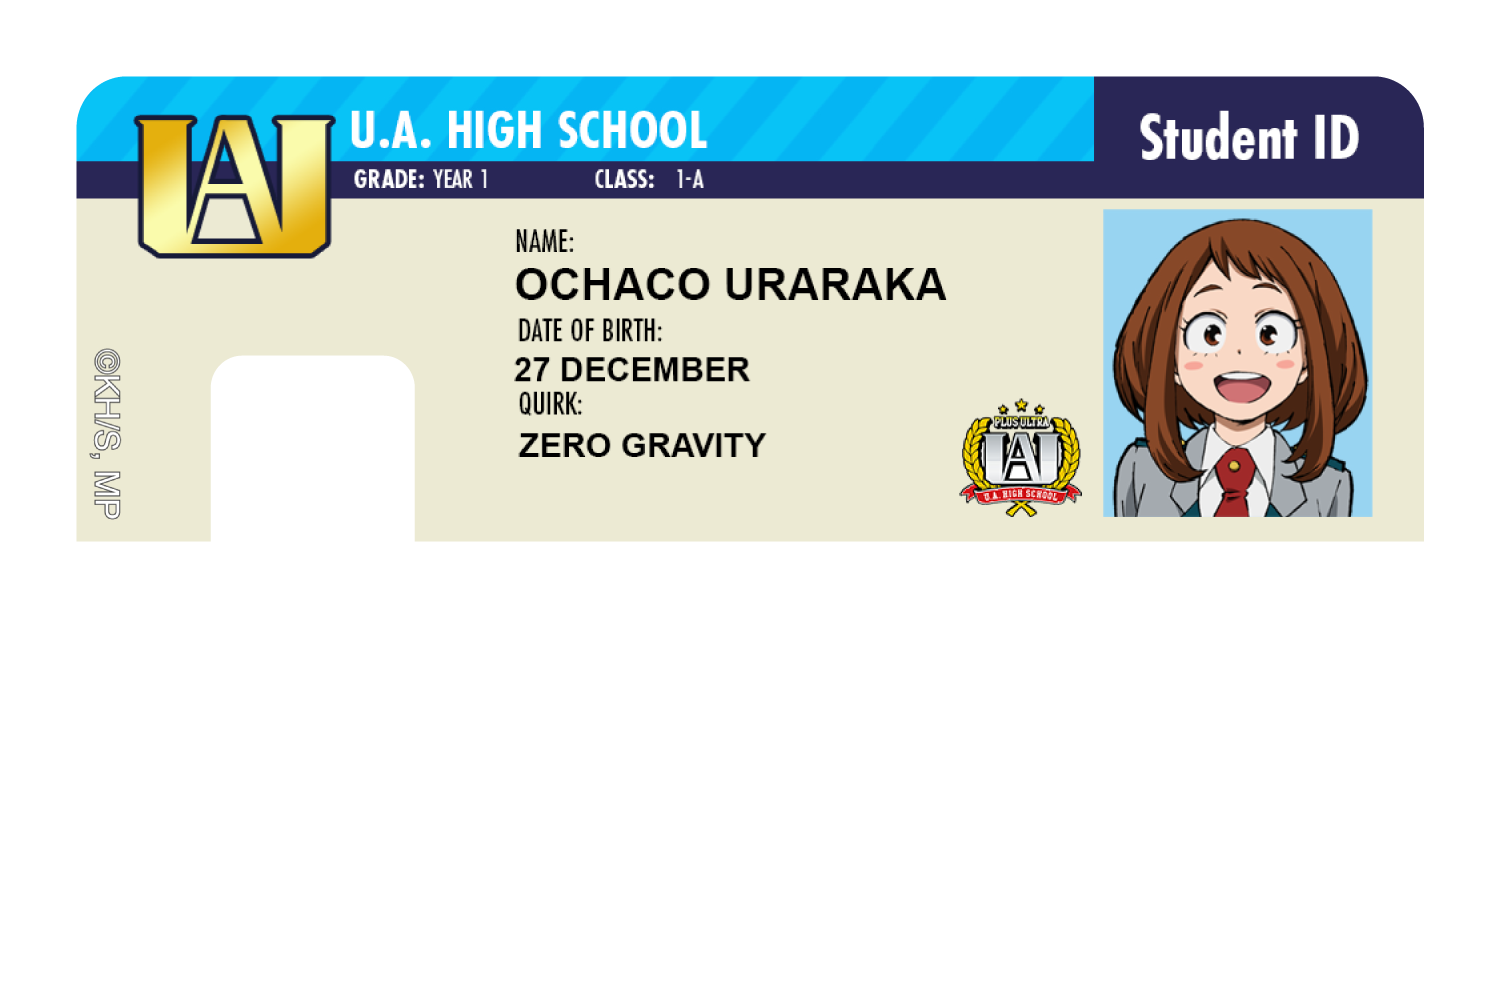 Student ID - Ochaco Uraraka - Card Covers - My Hero Academia - CUCU Covers